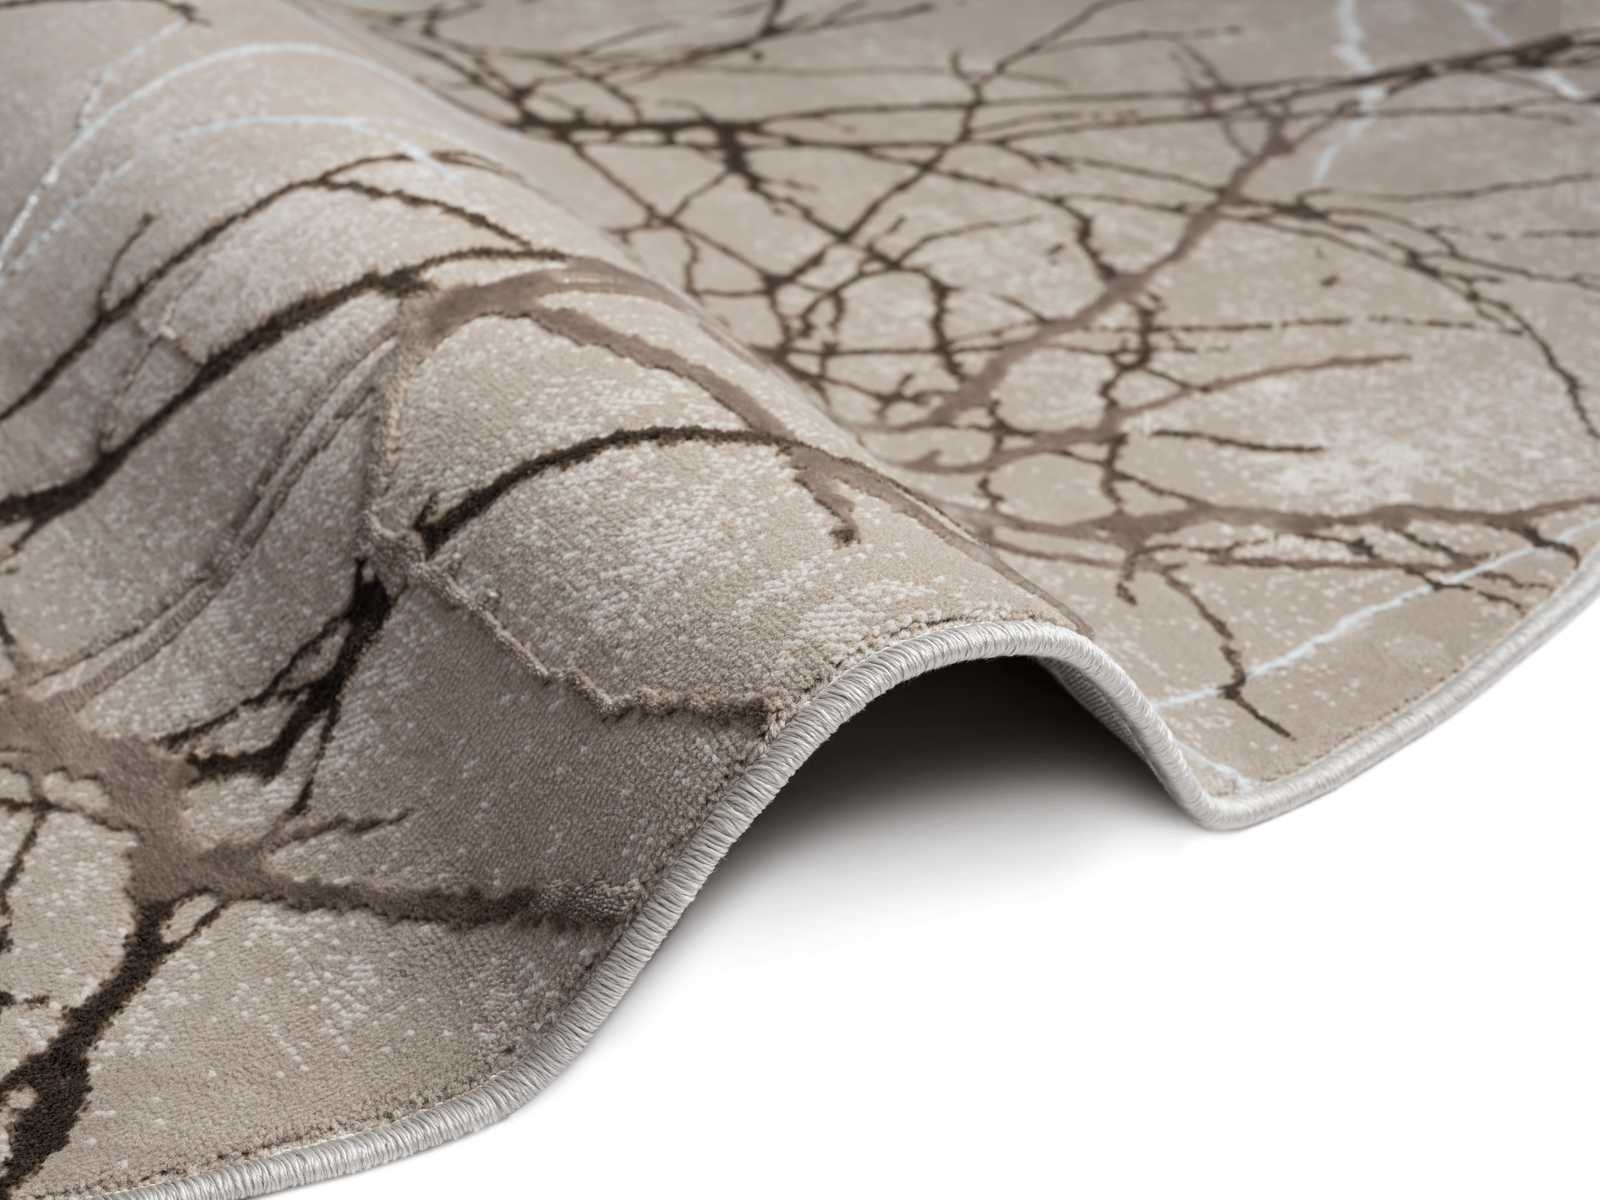             Pile carpet in soft beige - 290 x 200 cm
        